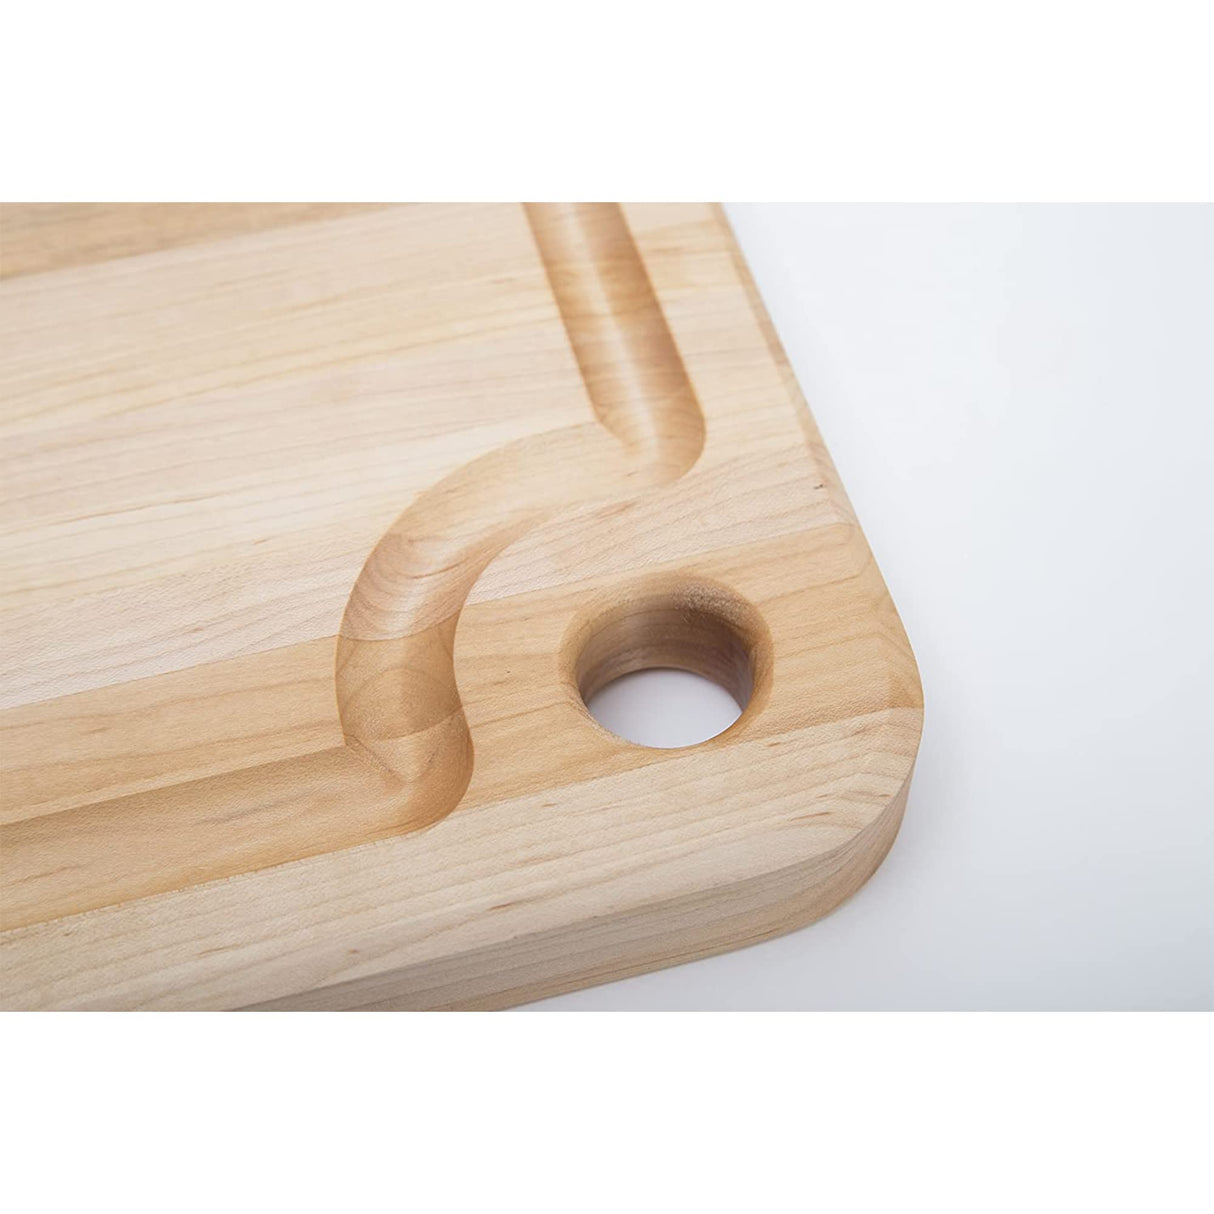 John Boos MPL1610125-FH-GRV Prestige Maple Wood Cutting Board for Kitchen Prep, 16 x 10 Inches, 1.25 Inches Thick Edge Grain Charcuterie Block with Juice Grooves 16X10X1.25 MPL-EDGE GR-PRESTIGE BRD